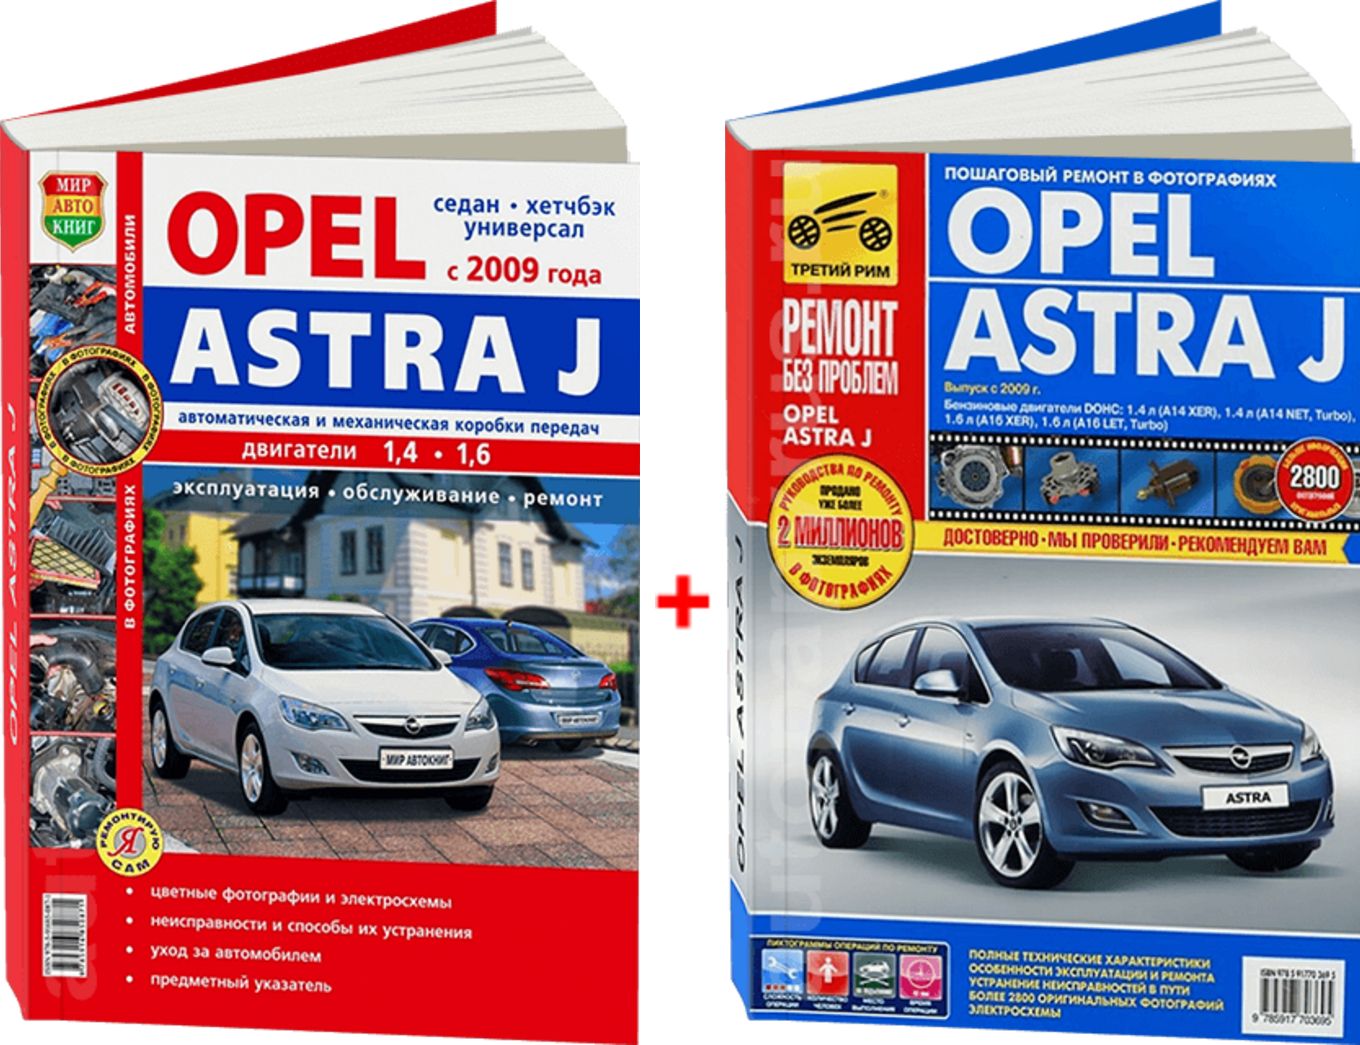 Цены на ремонт Opel Astra J